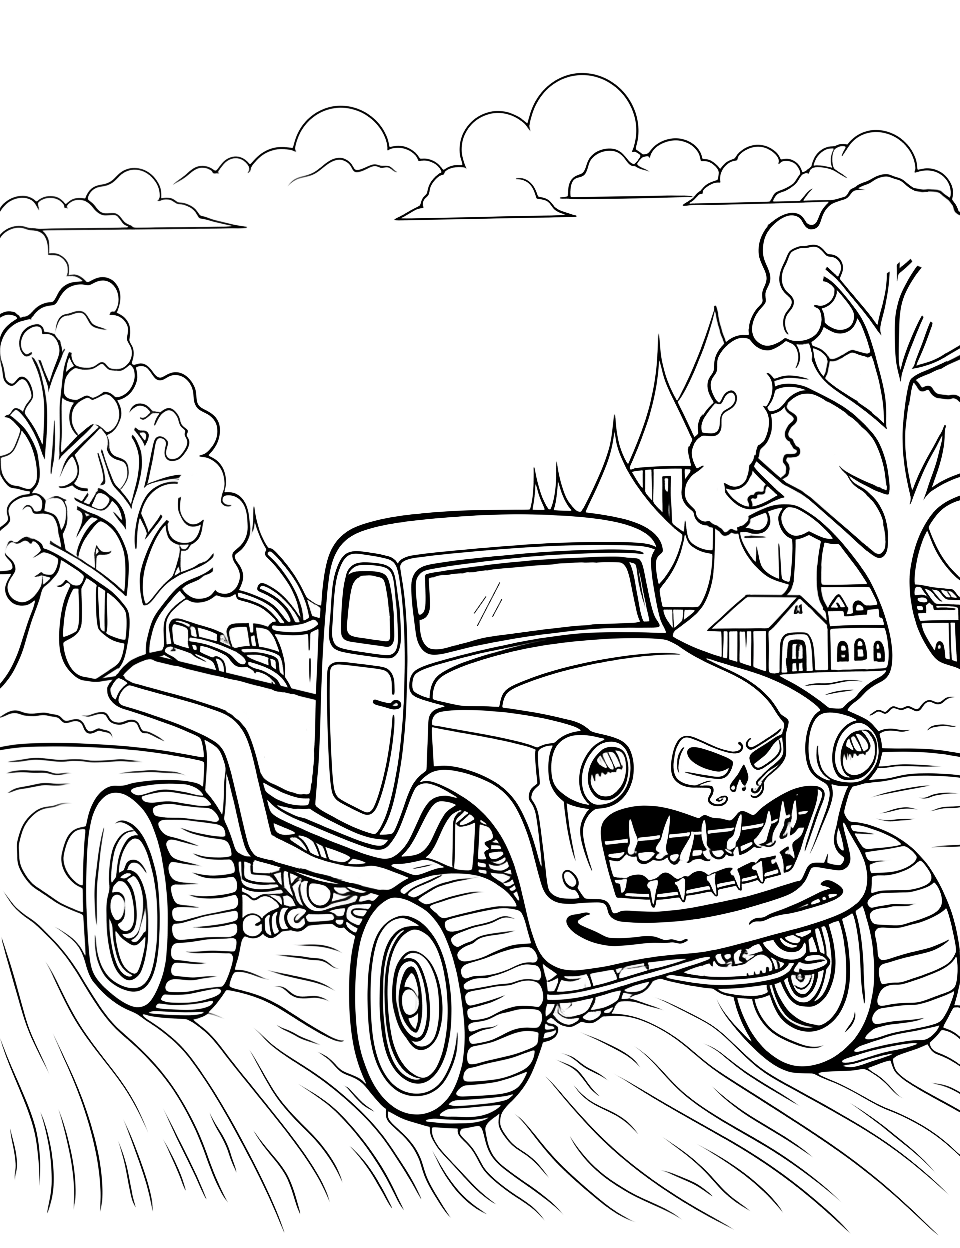 Bone Shaker's Graveyard Run Monster Truck Coloring Page - Bone Shaker truck racing through a spooky graveyard.